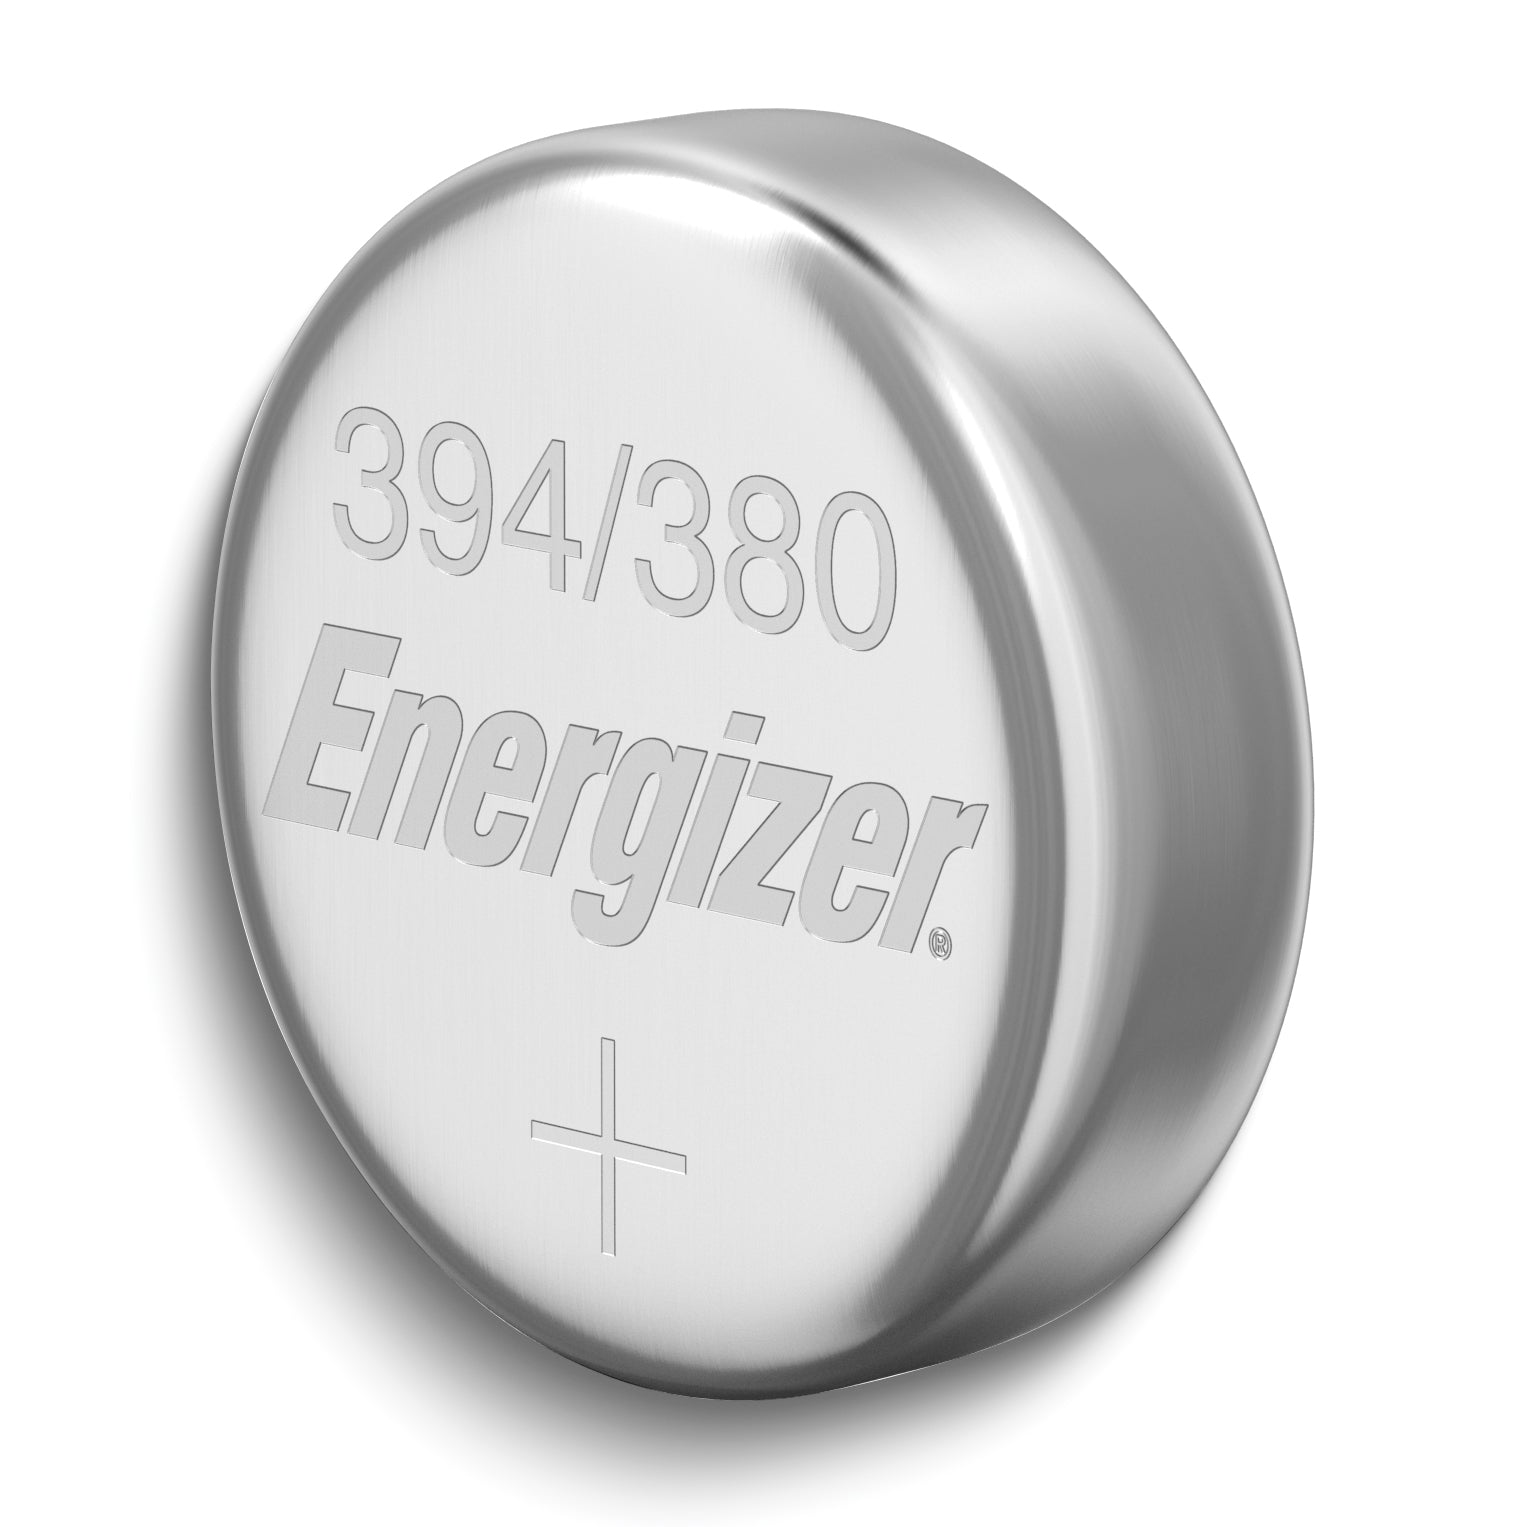 Pkg/(5) Type 394/380 Energizer Watch Batteries Tear Strip